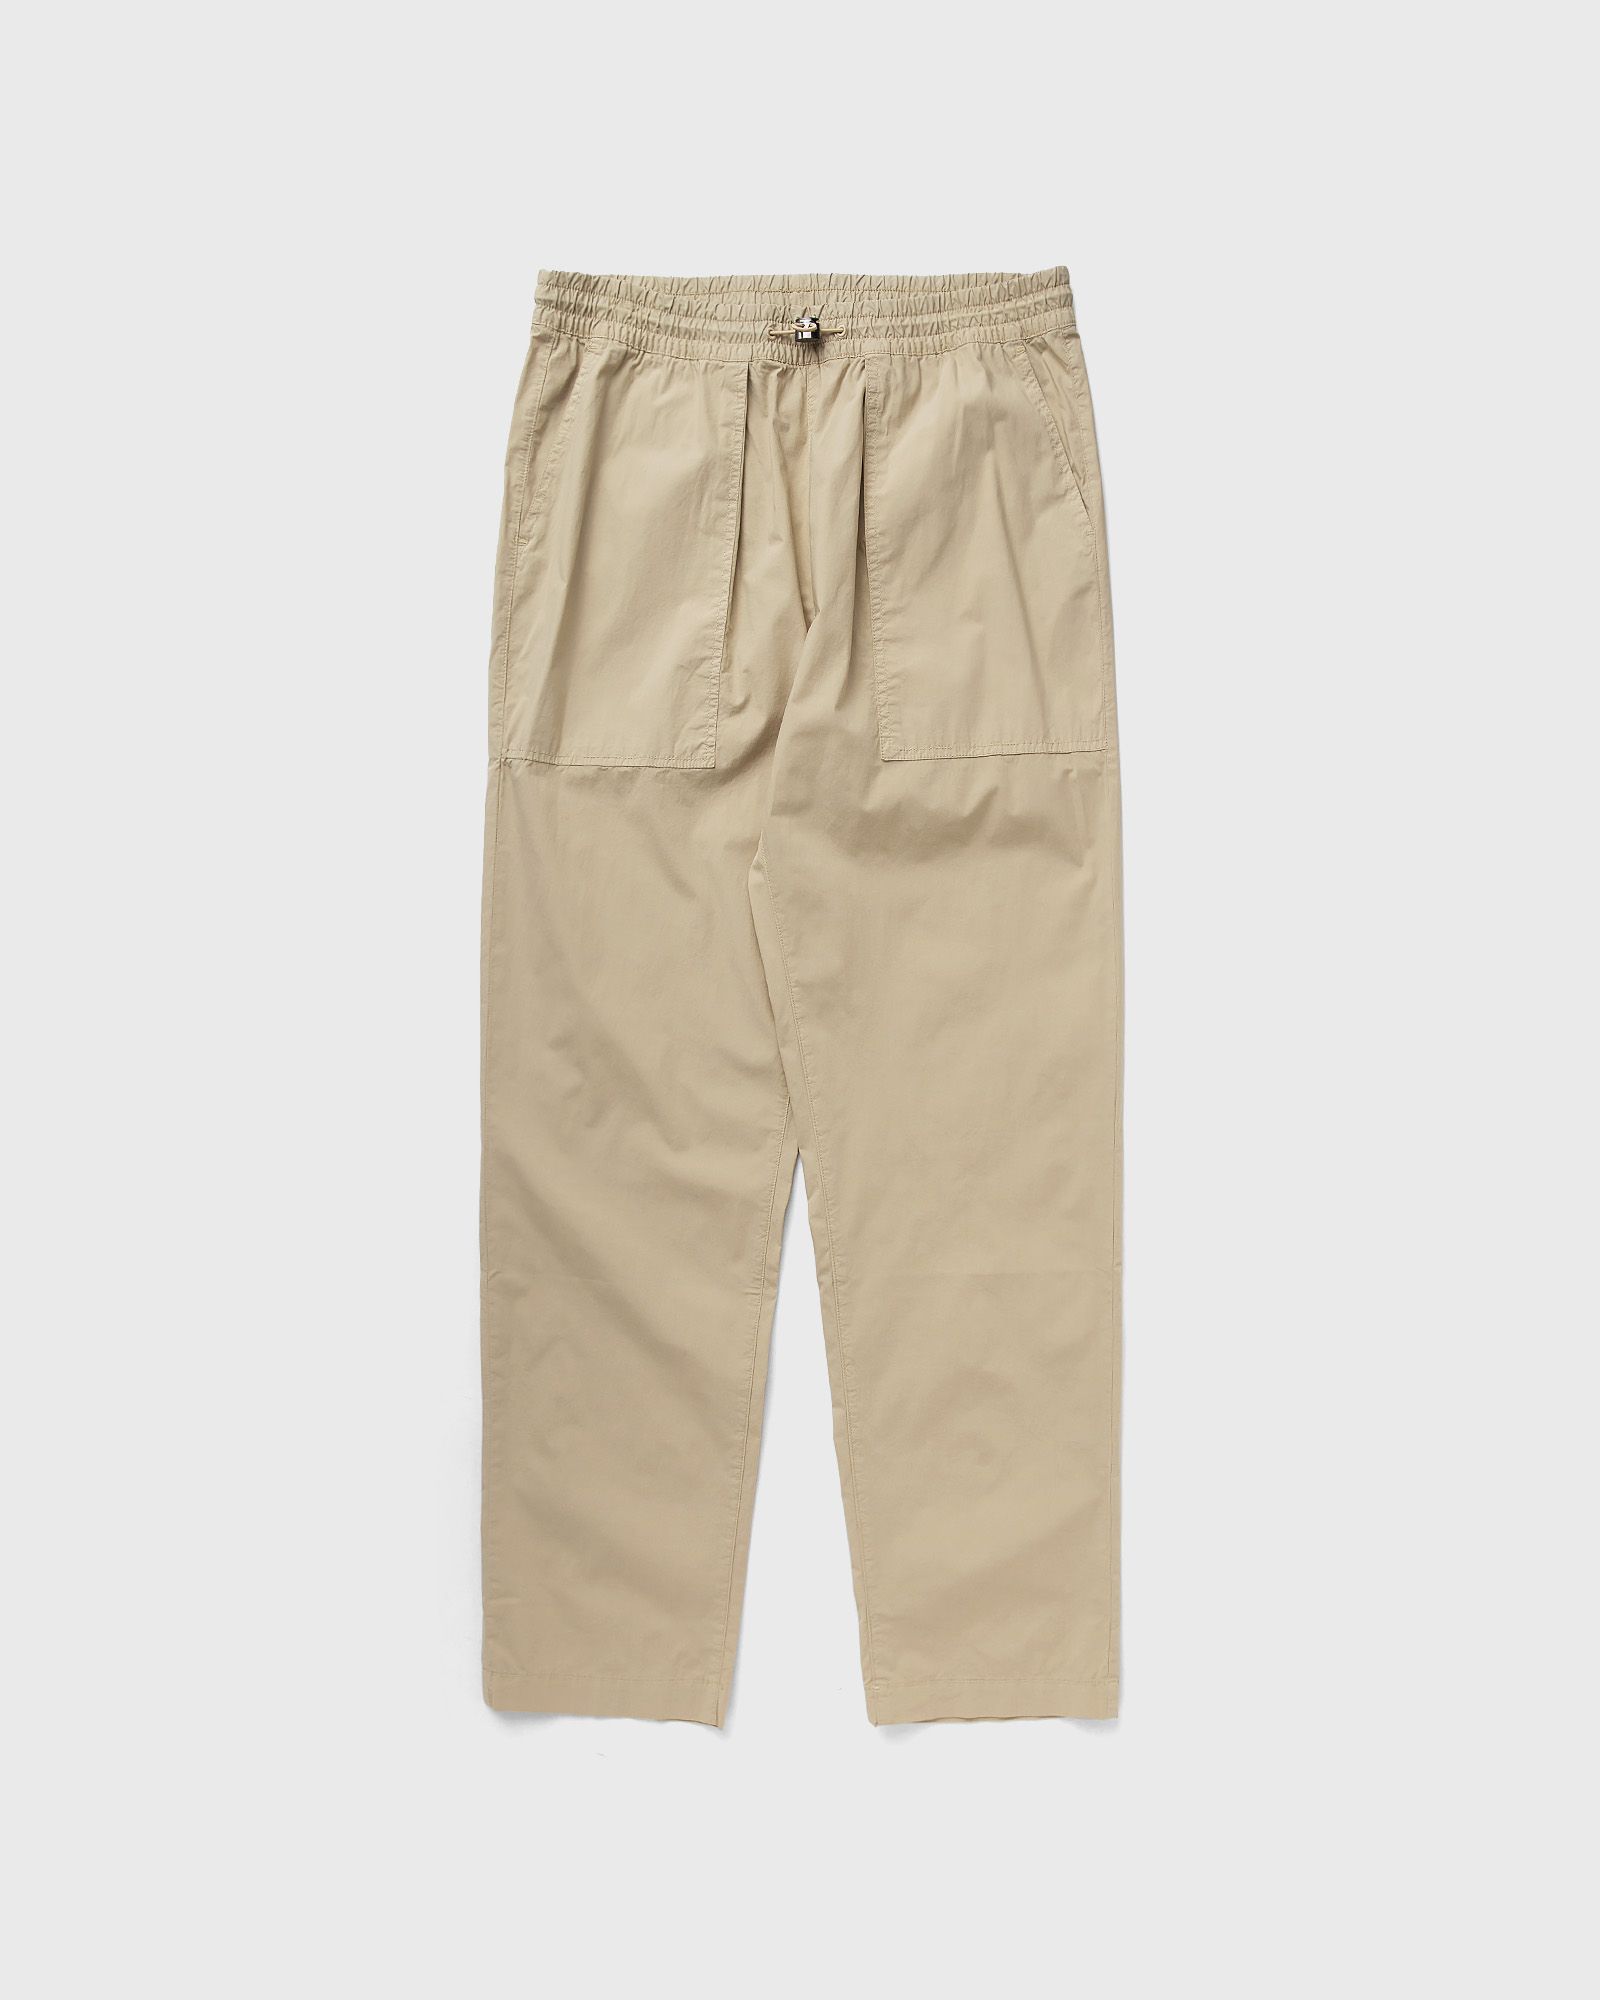 Edmmond Studios - light pants men cargo pants brown in größe:s